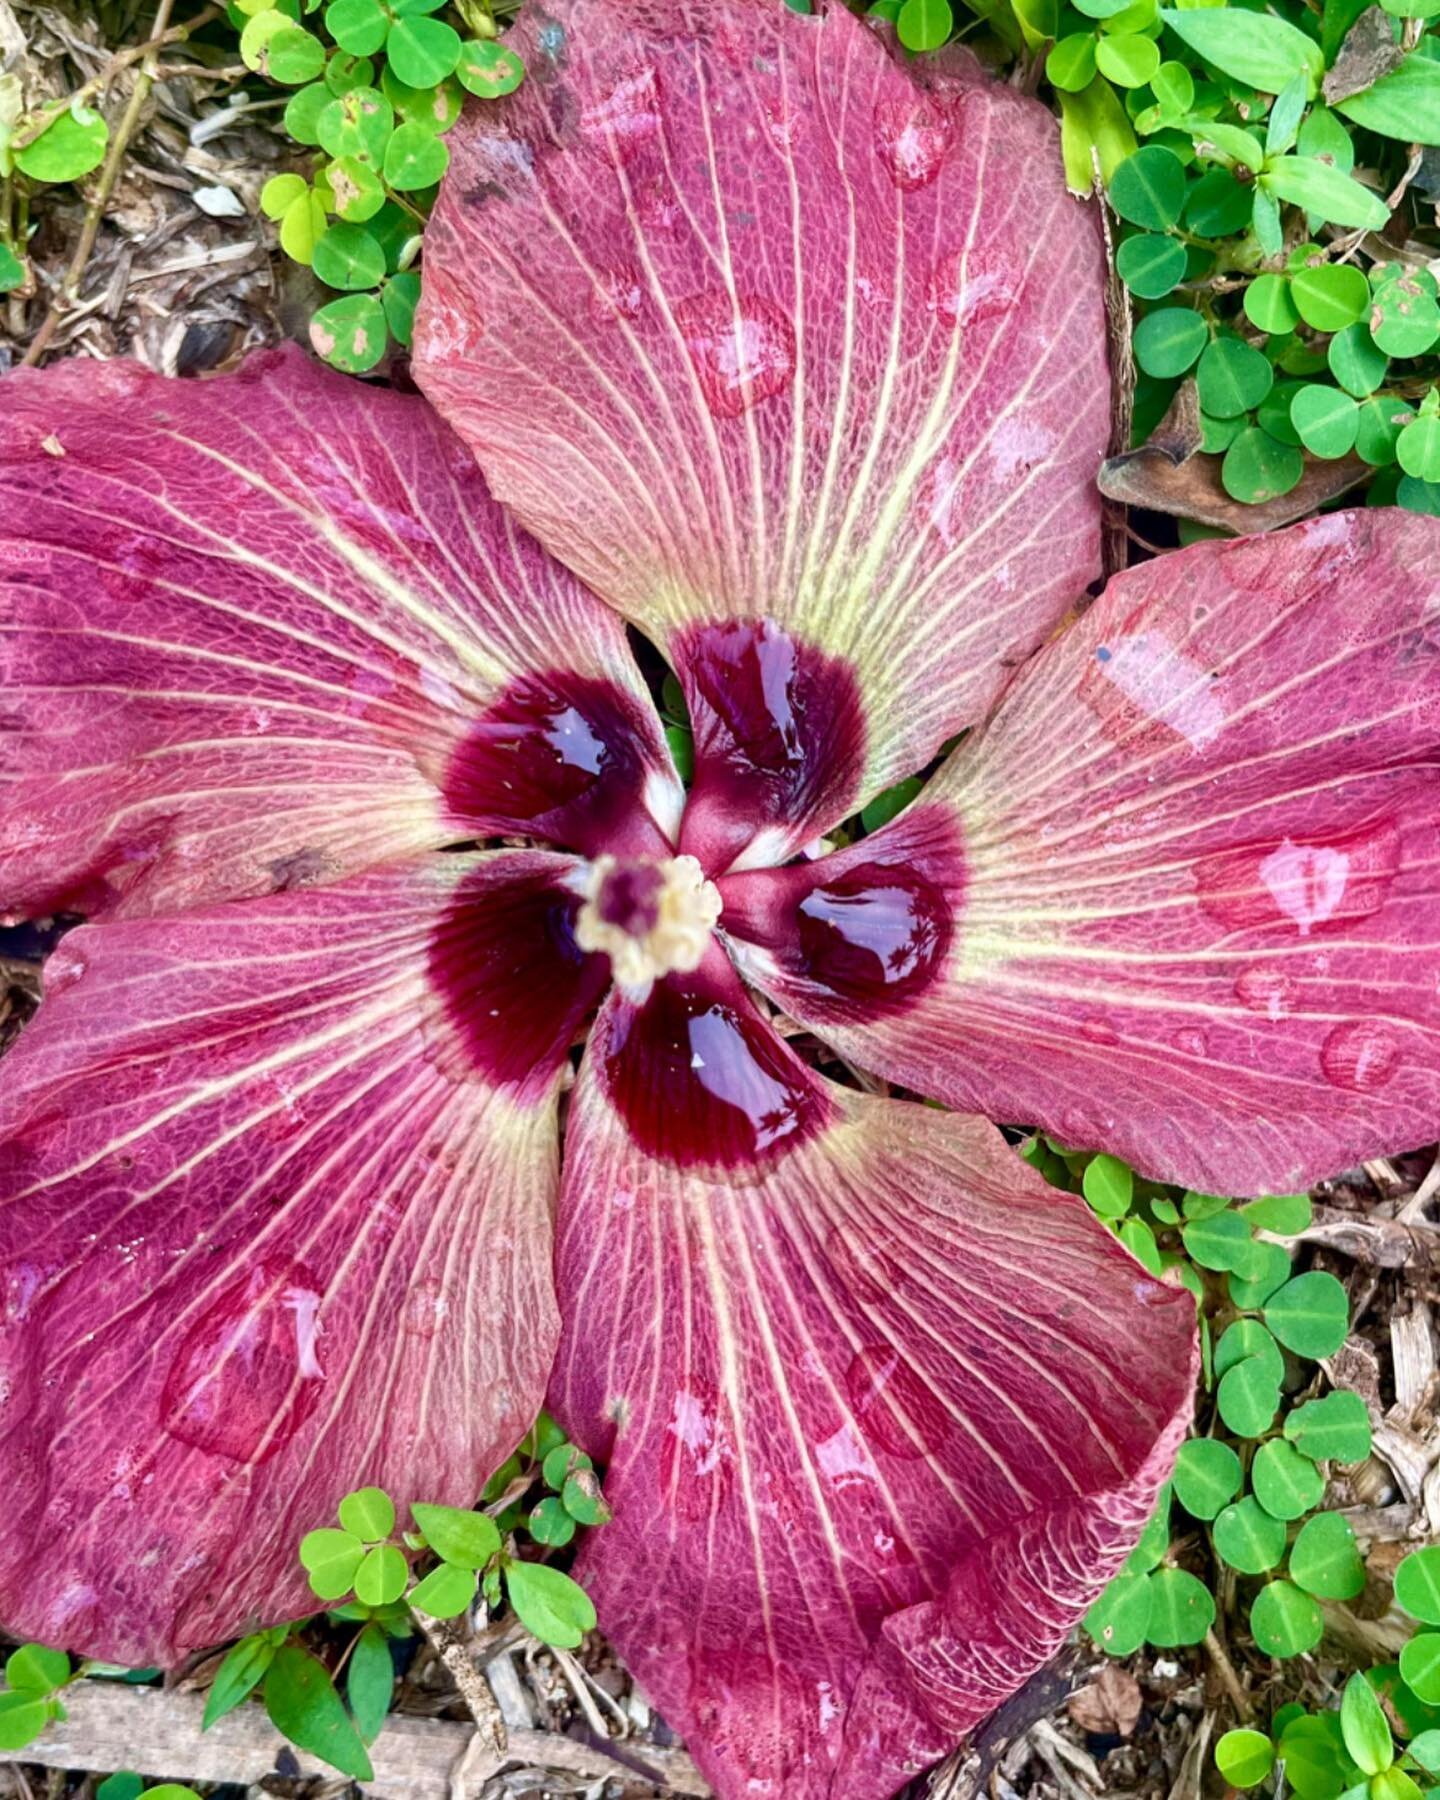 After the Rain. Hibiscus. 

#fiji #hibiscus #savusavu #southpacific